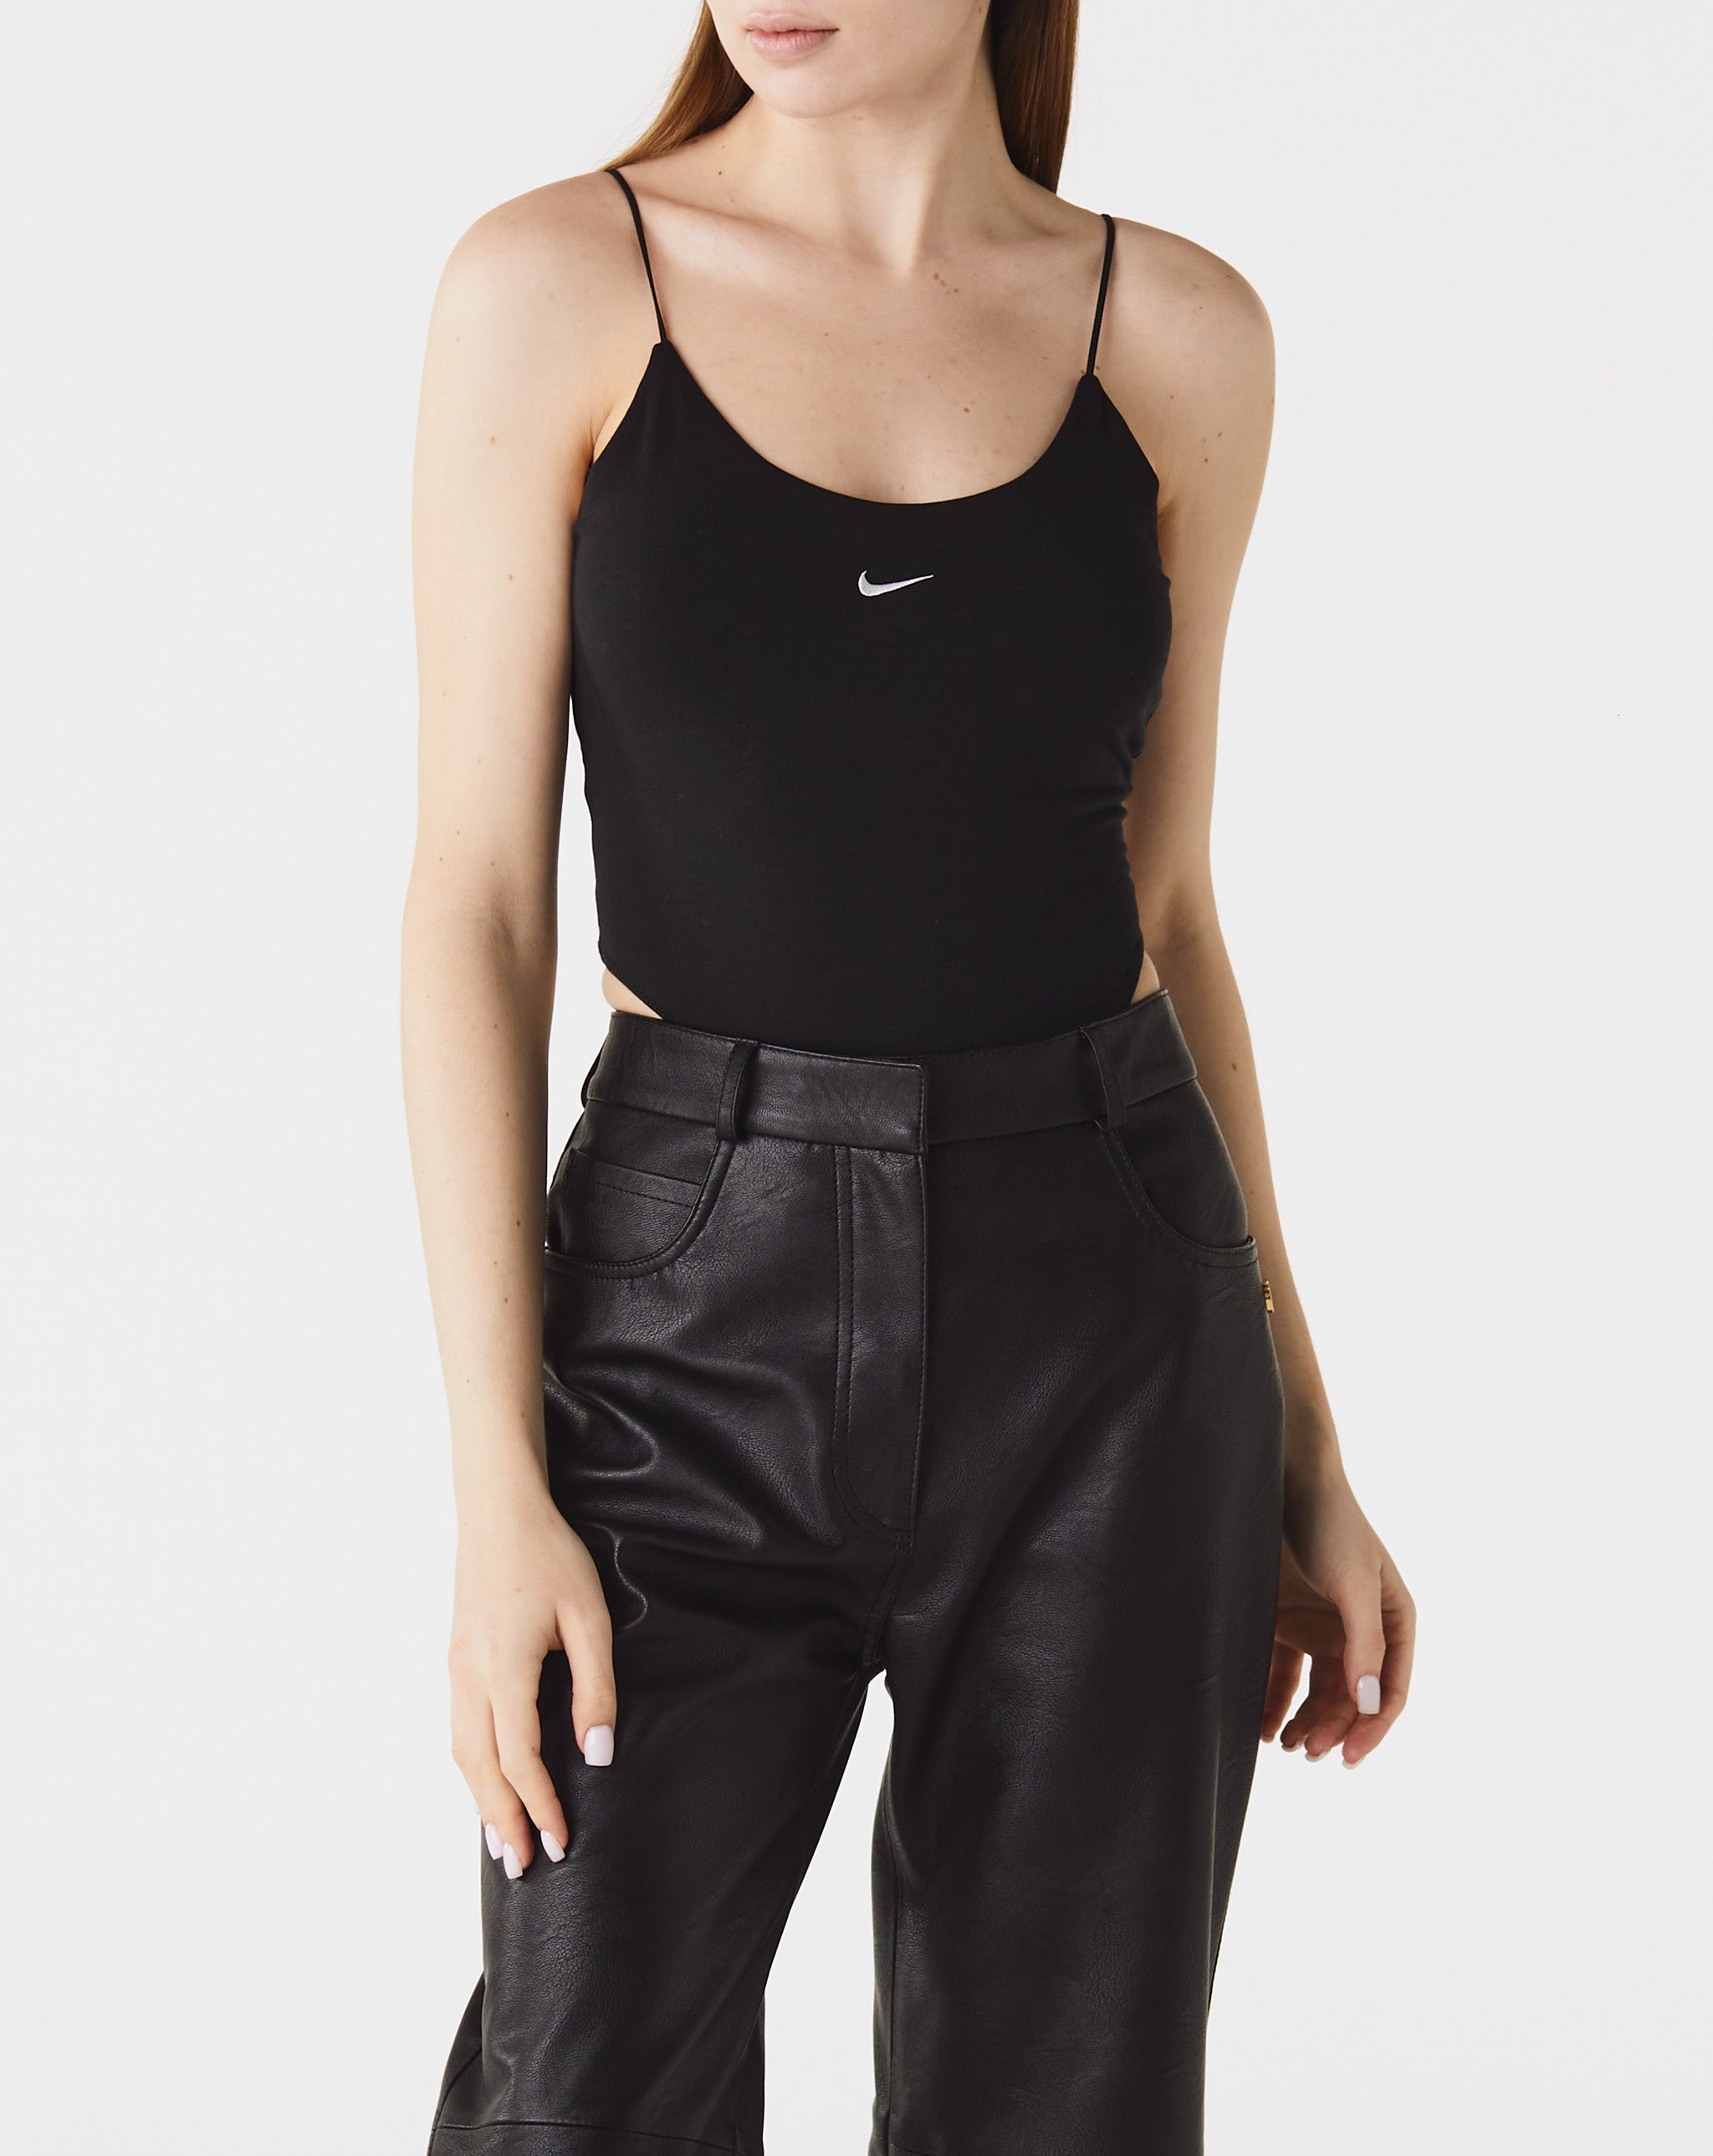 Nike - Women's Yoga Luxe Bra - Black